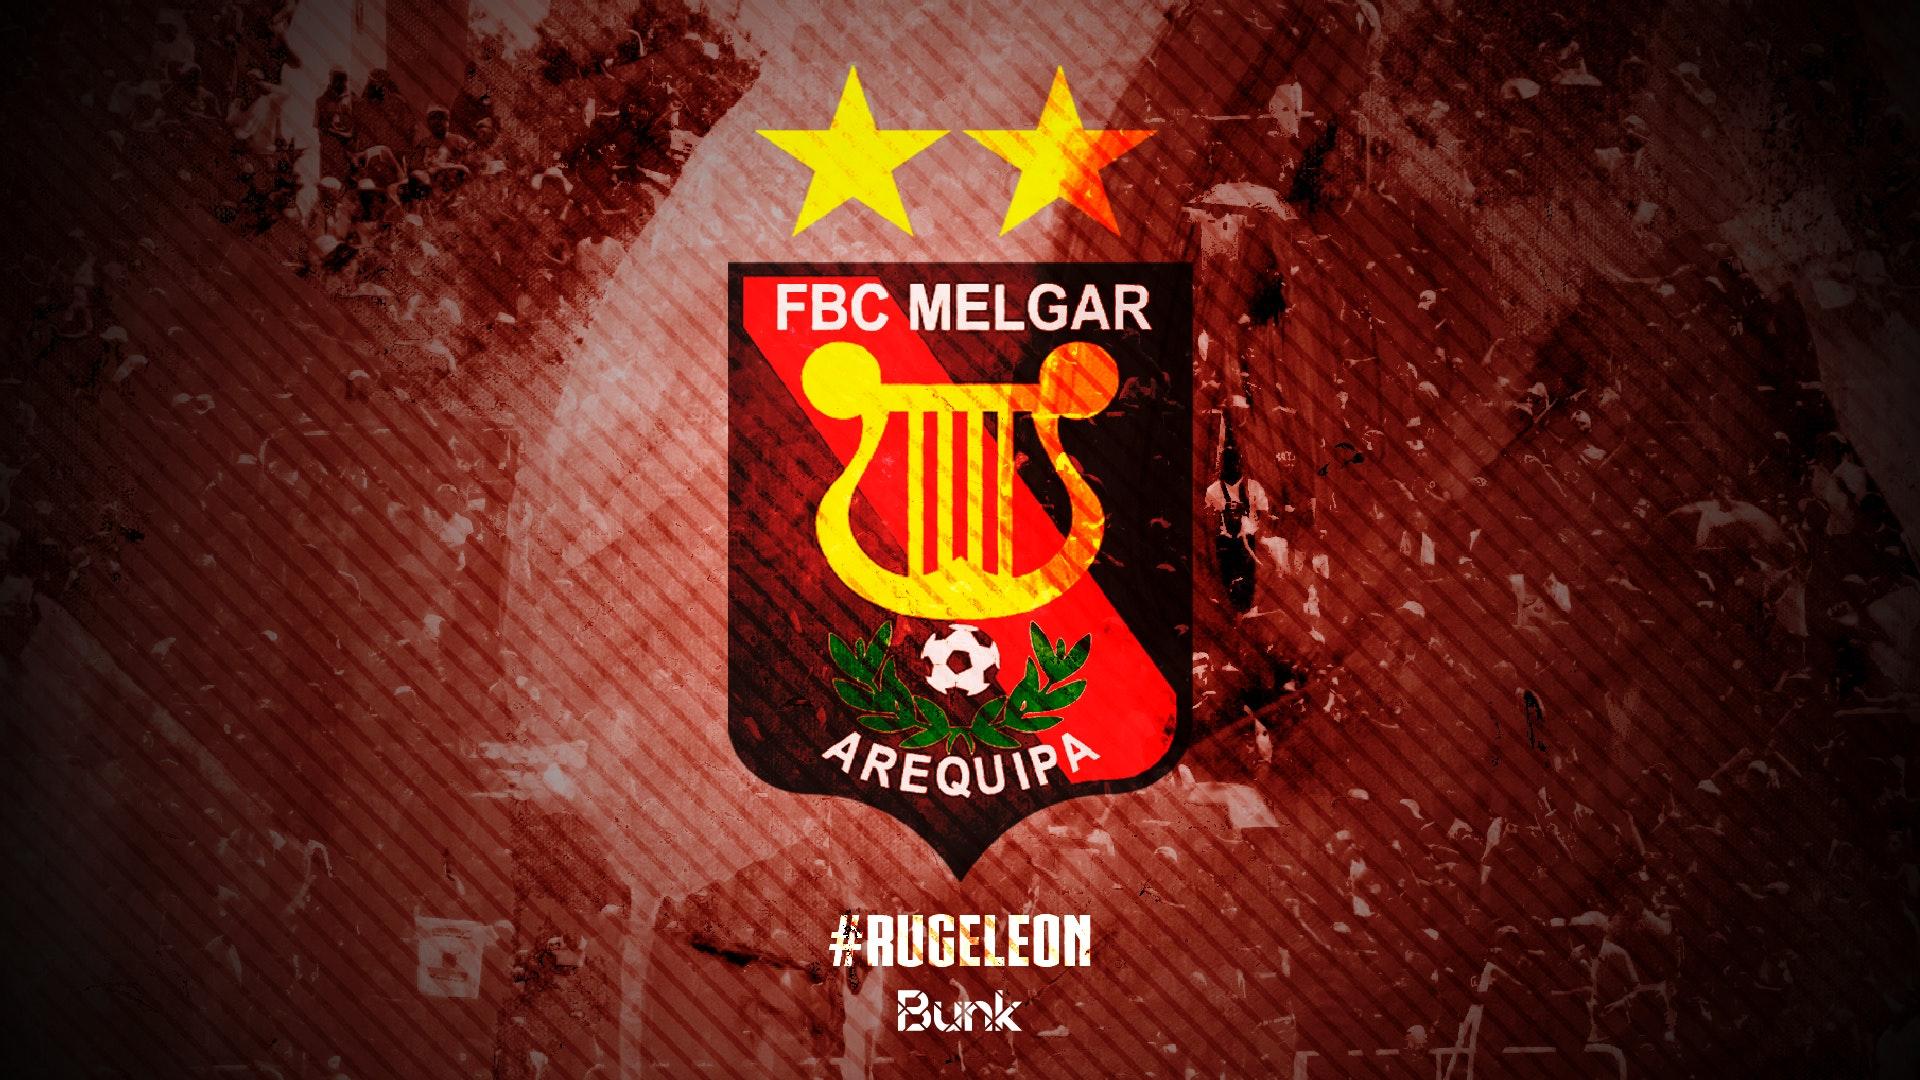 Free of futbol, Melgar, peru